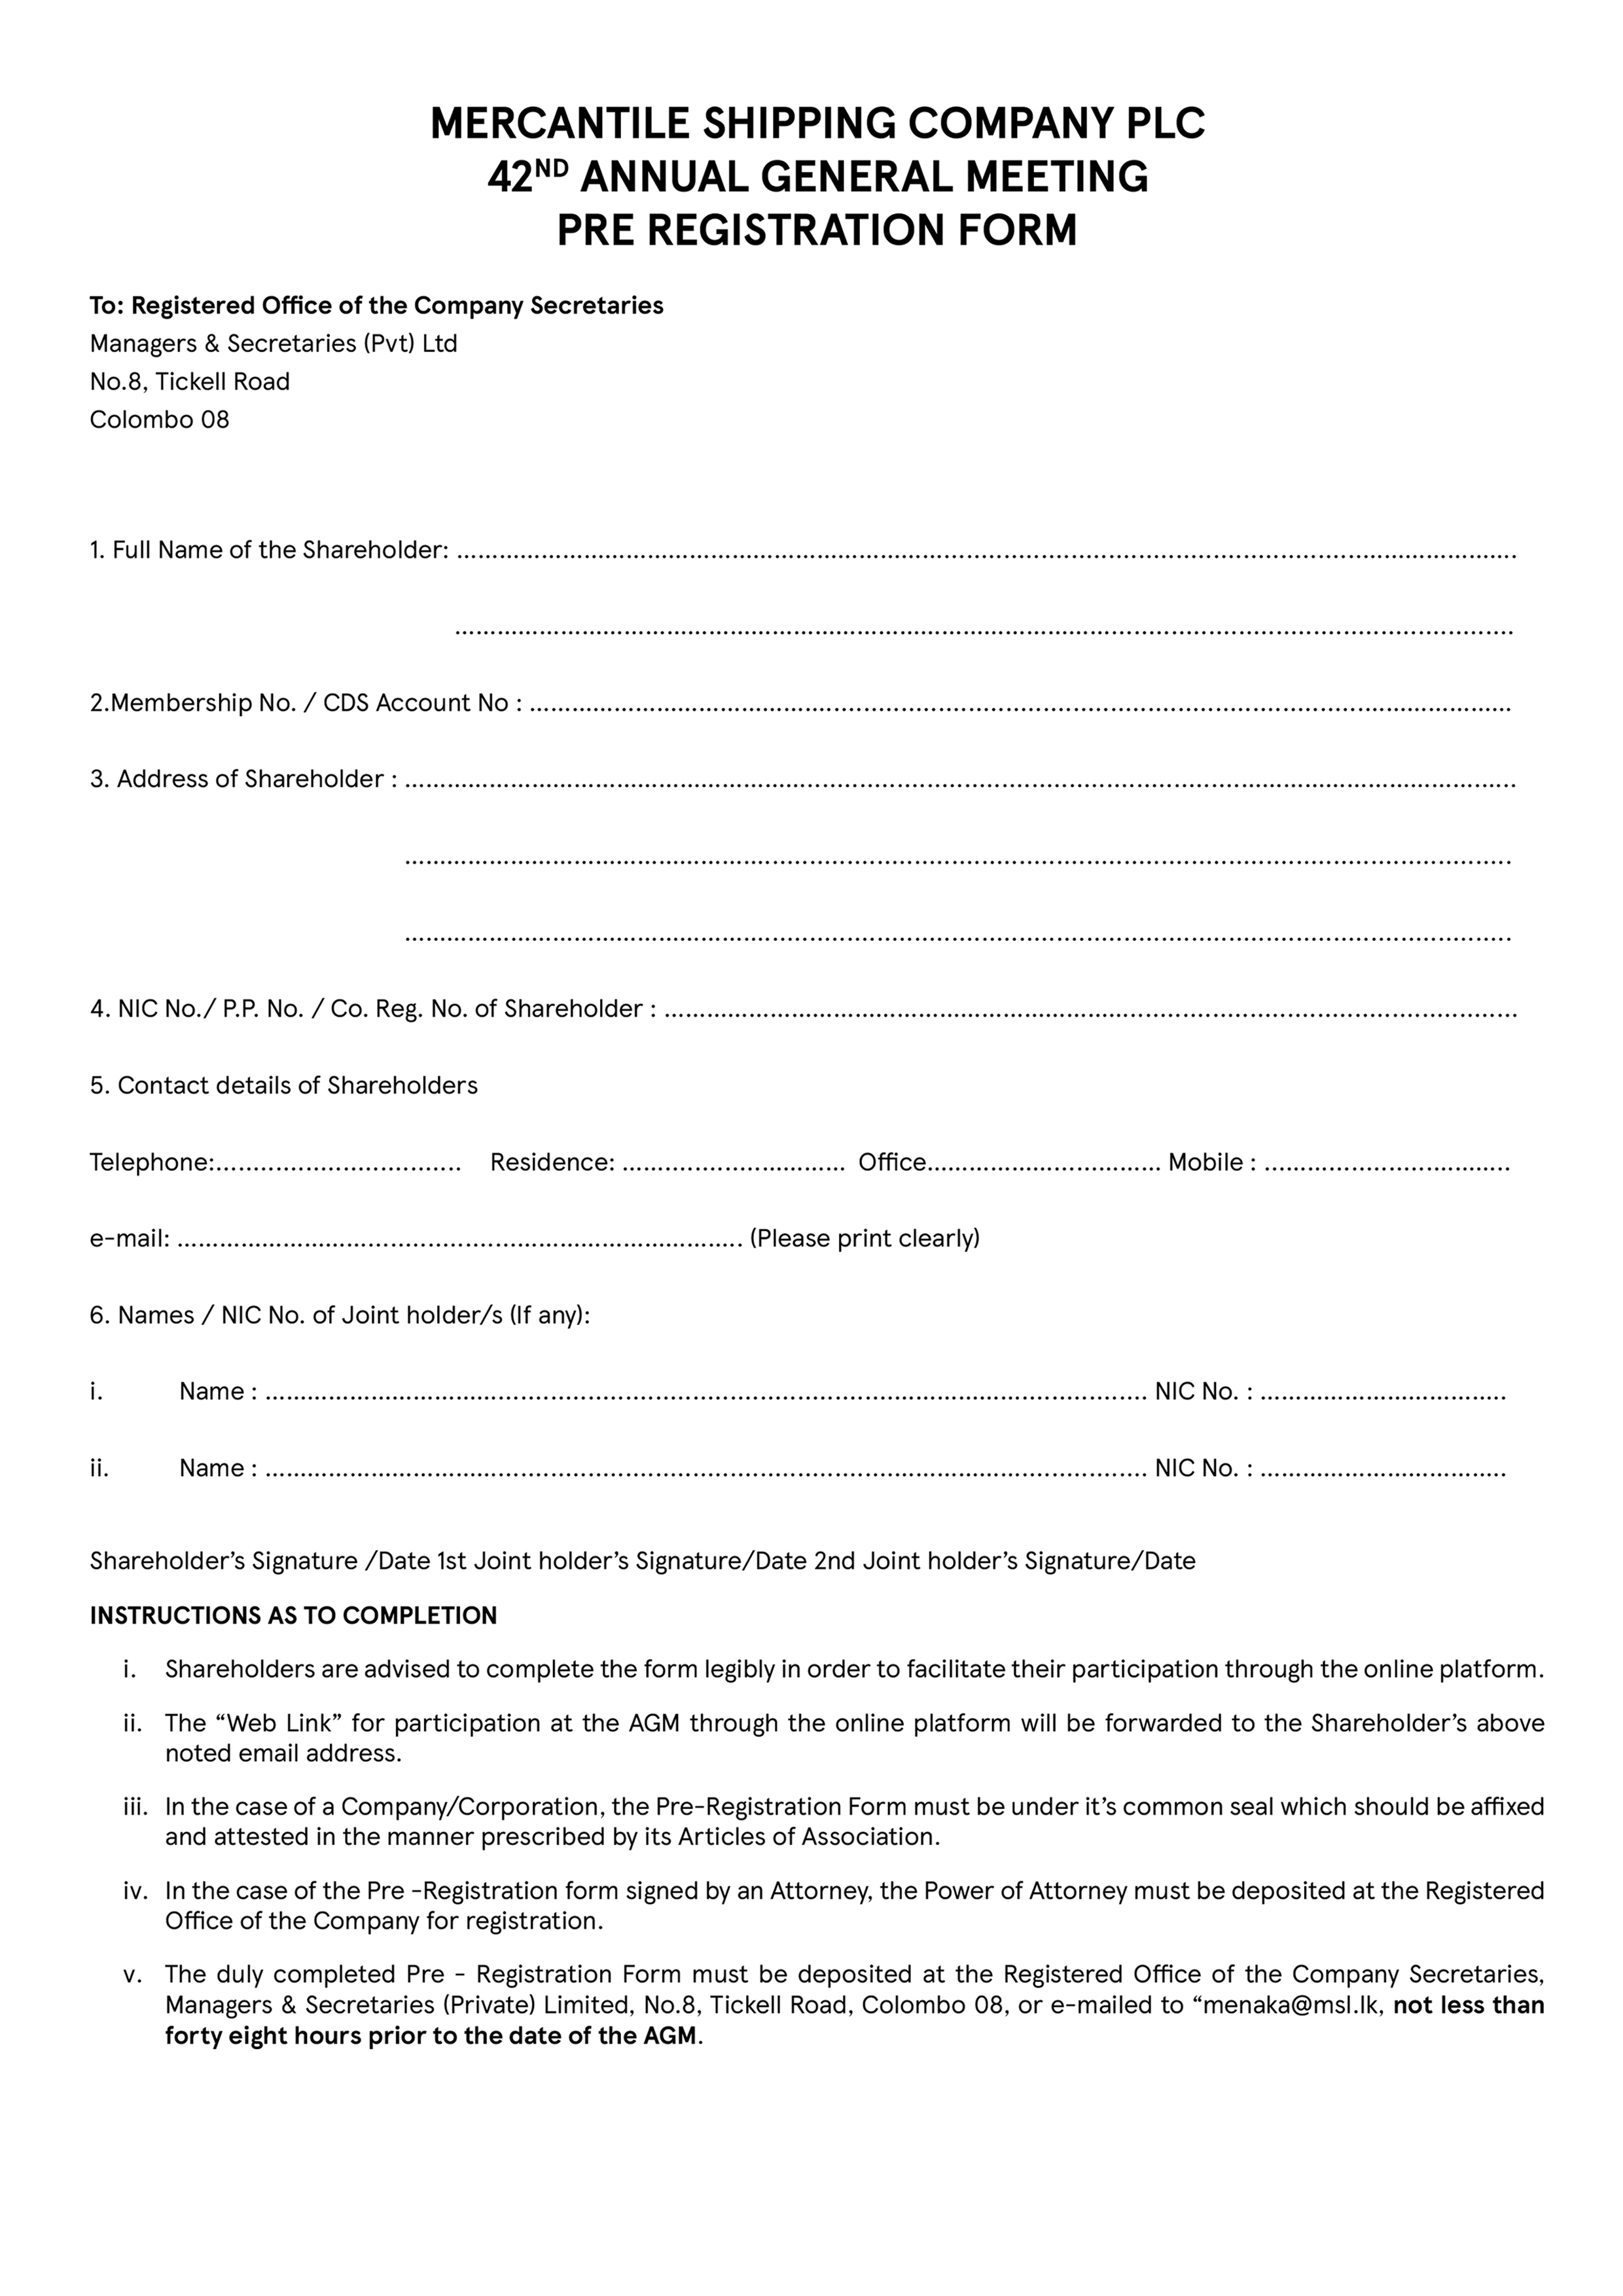 Annexure 1- Pre Registration Form